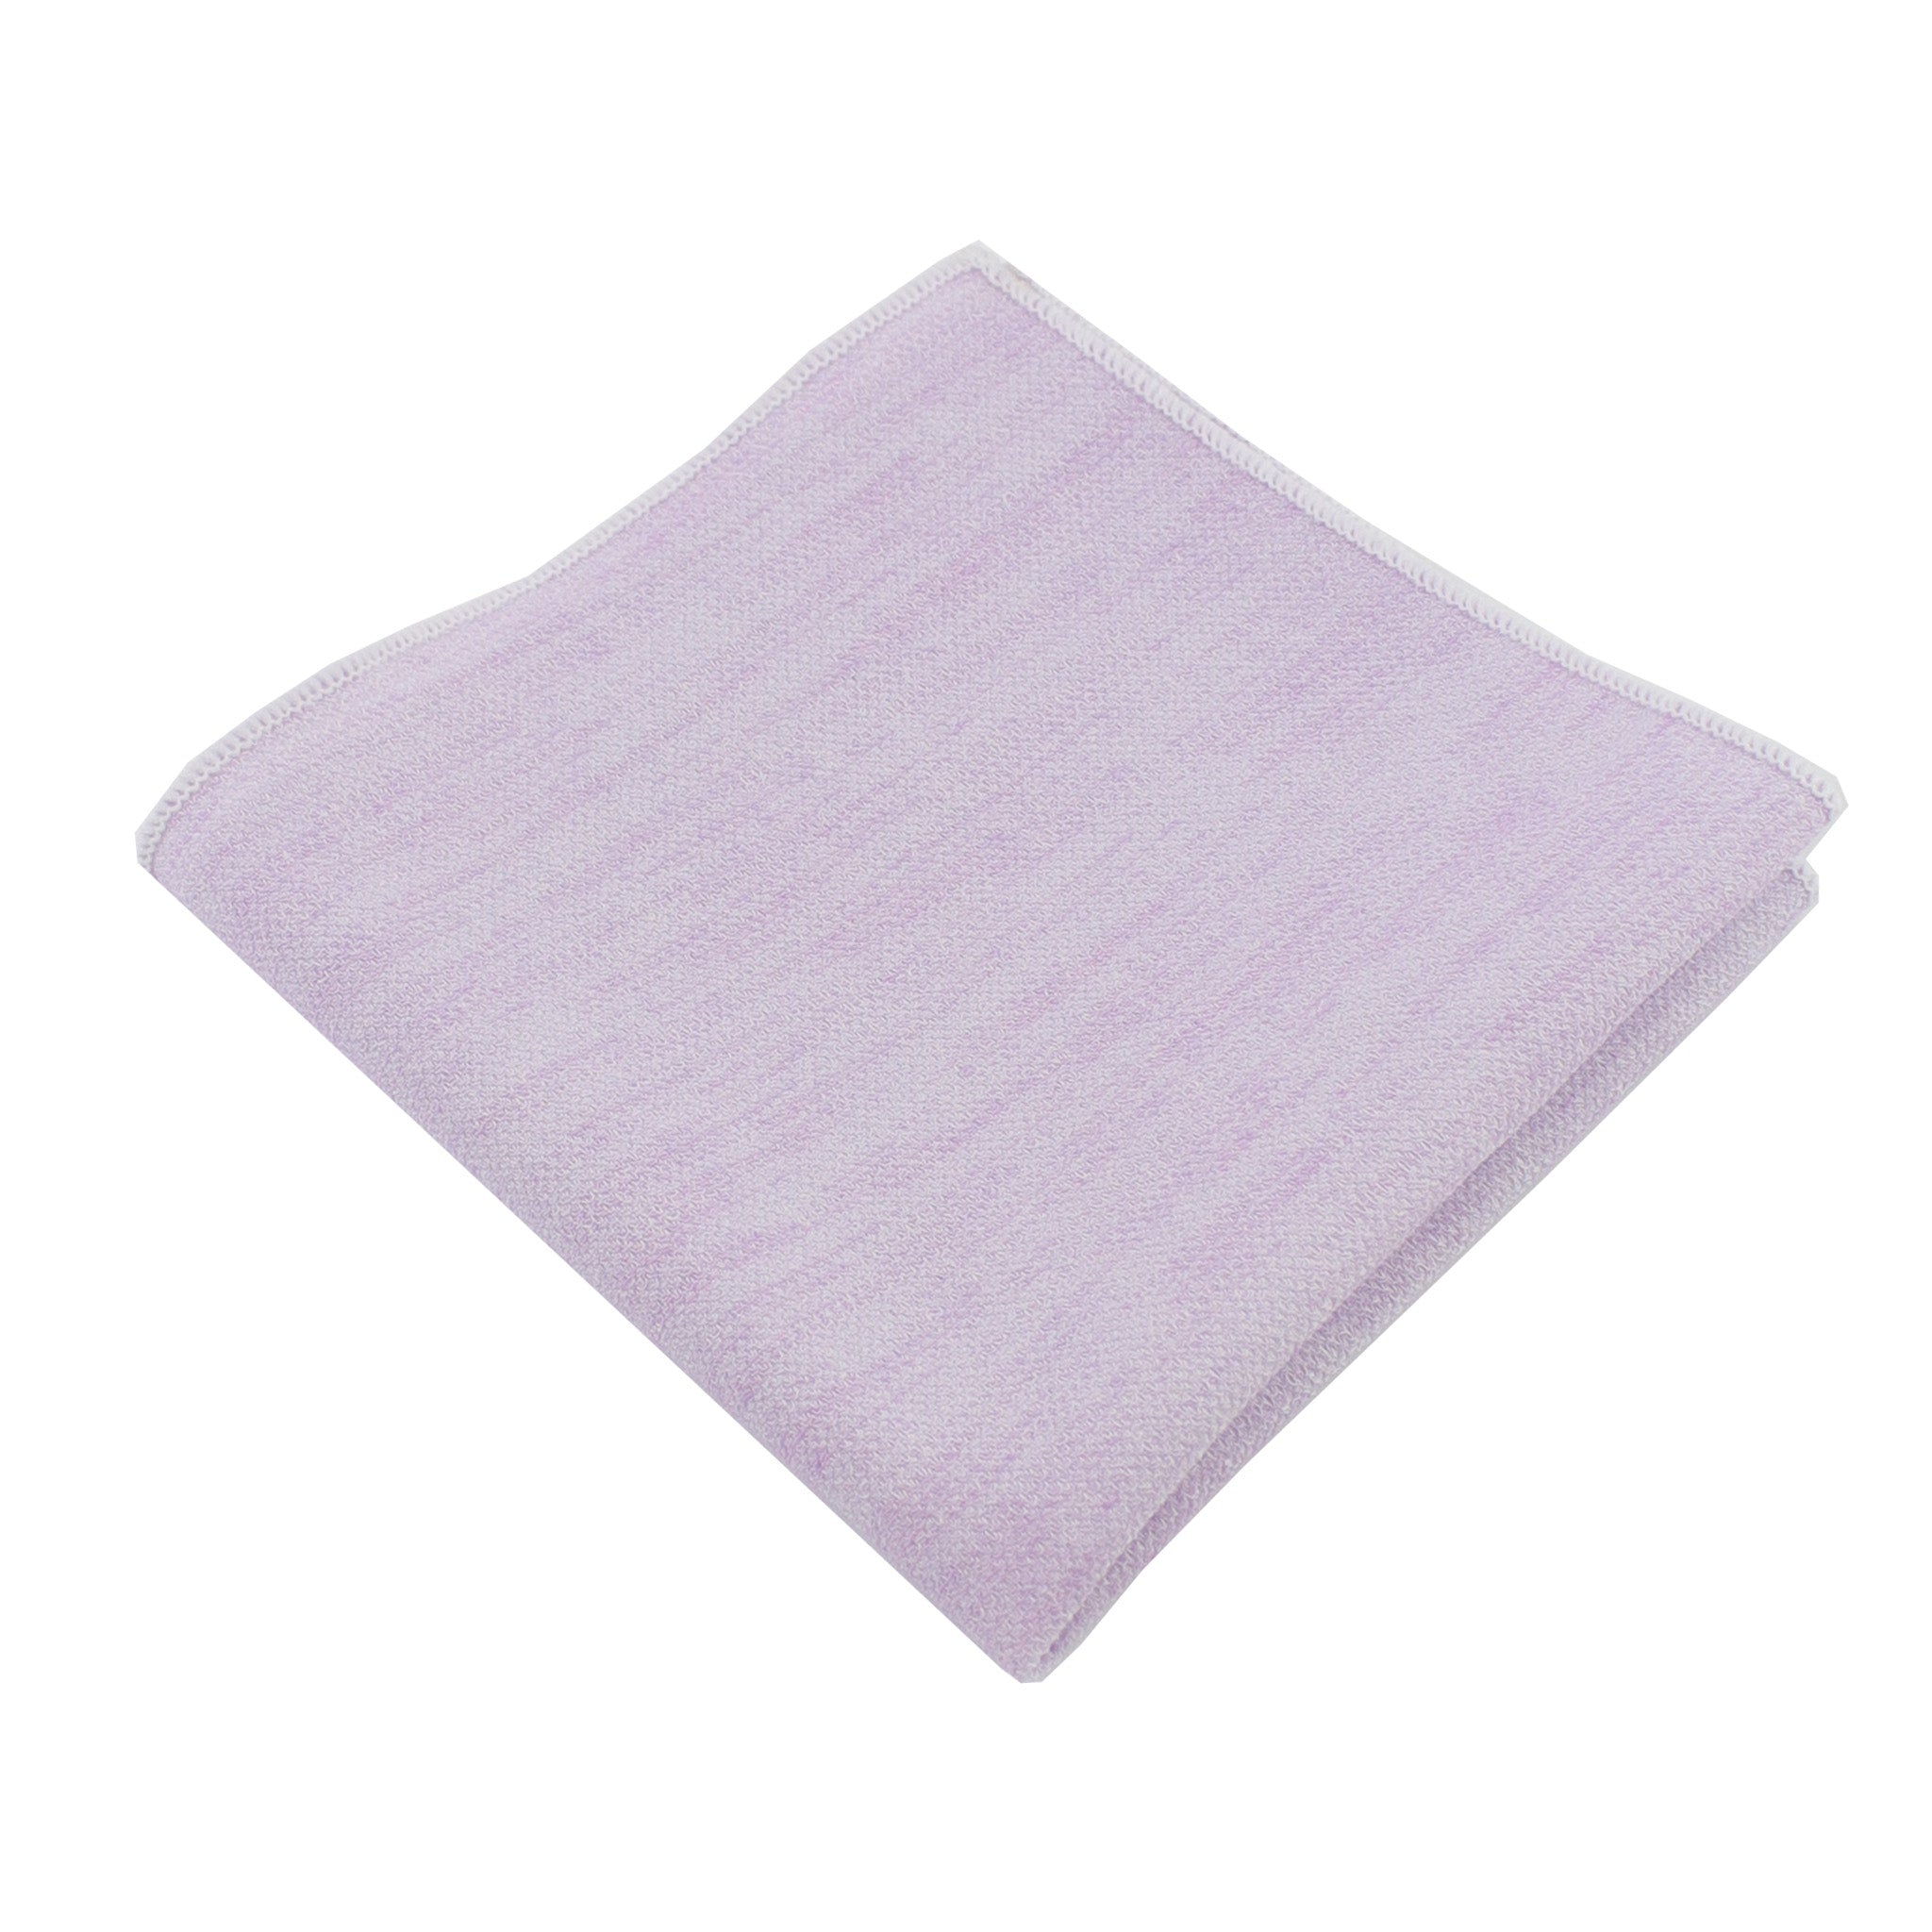 Lavender Cloud Pocket Square from DIBI